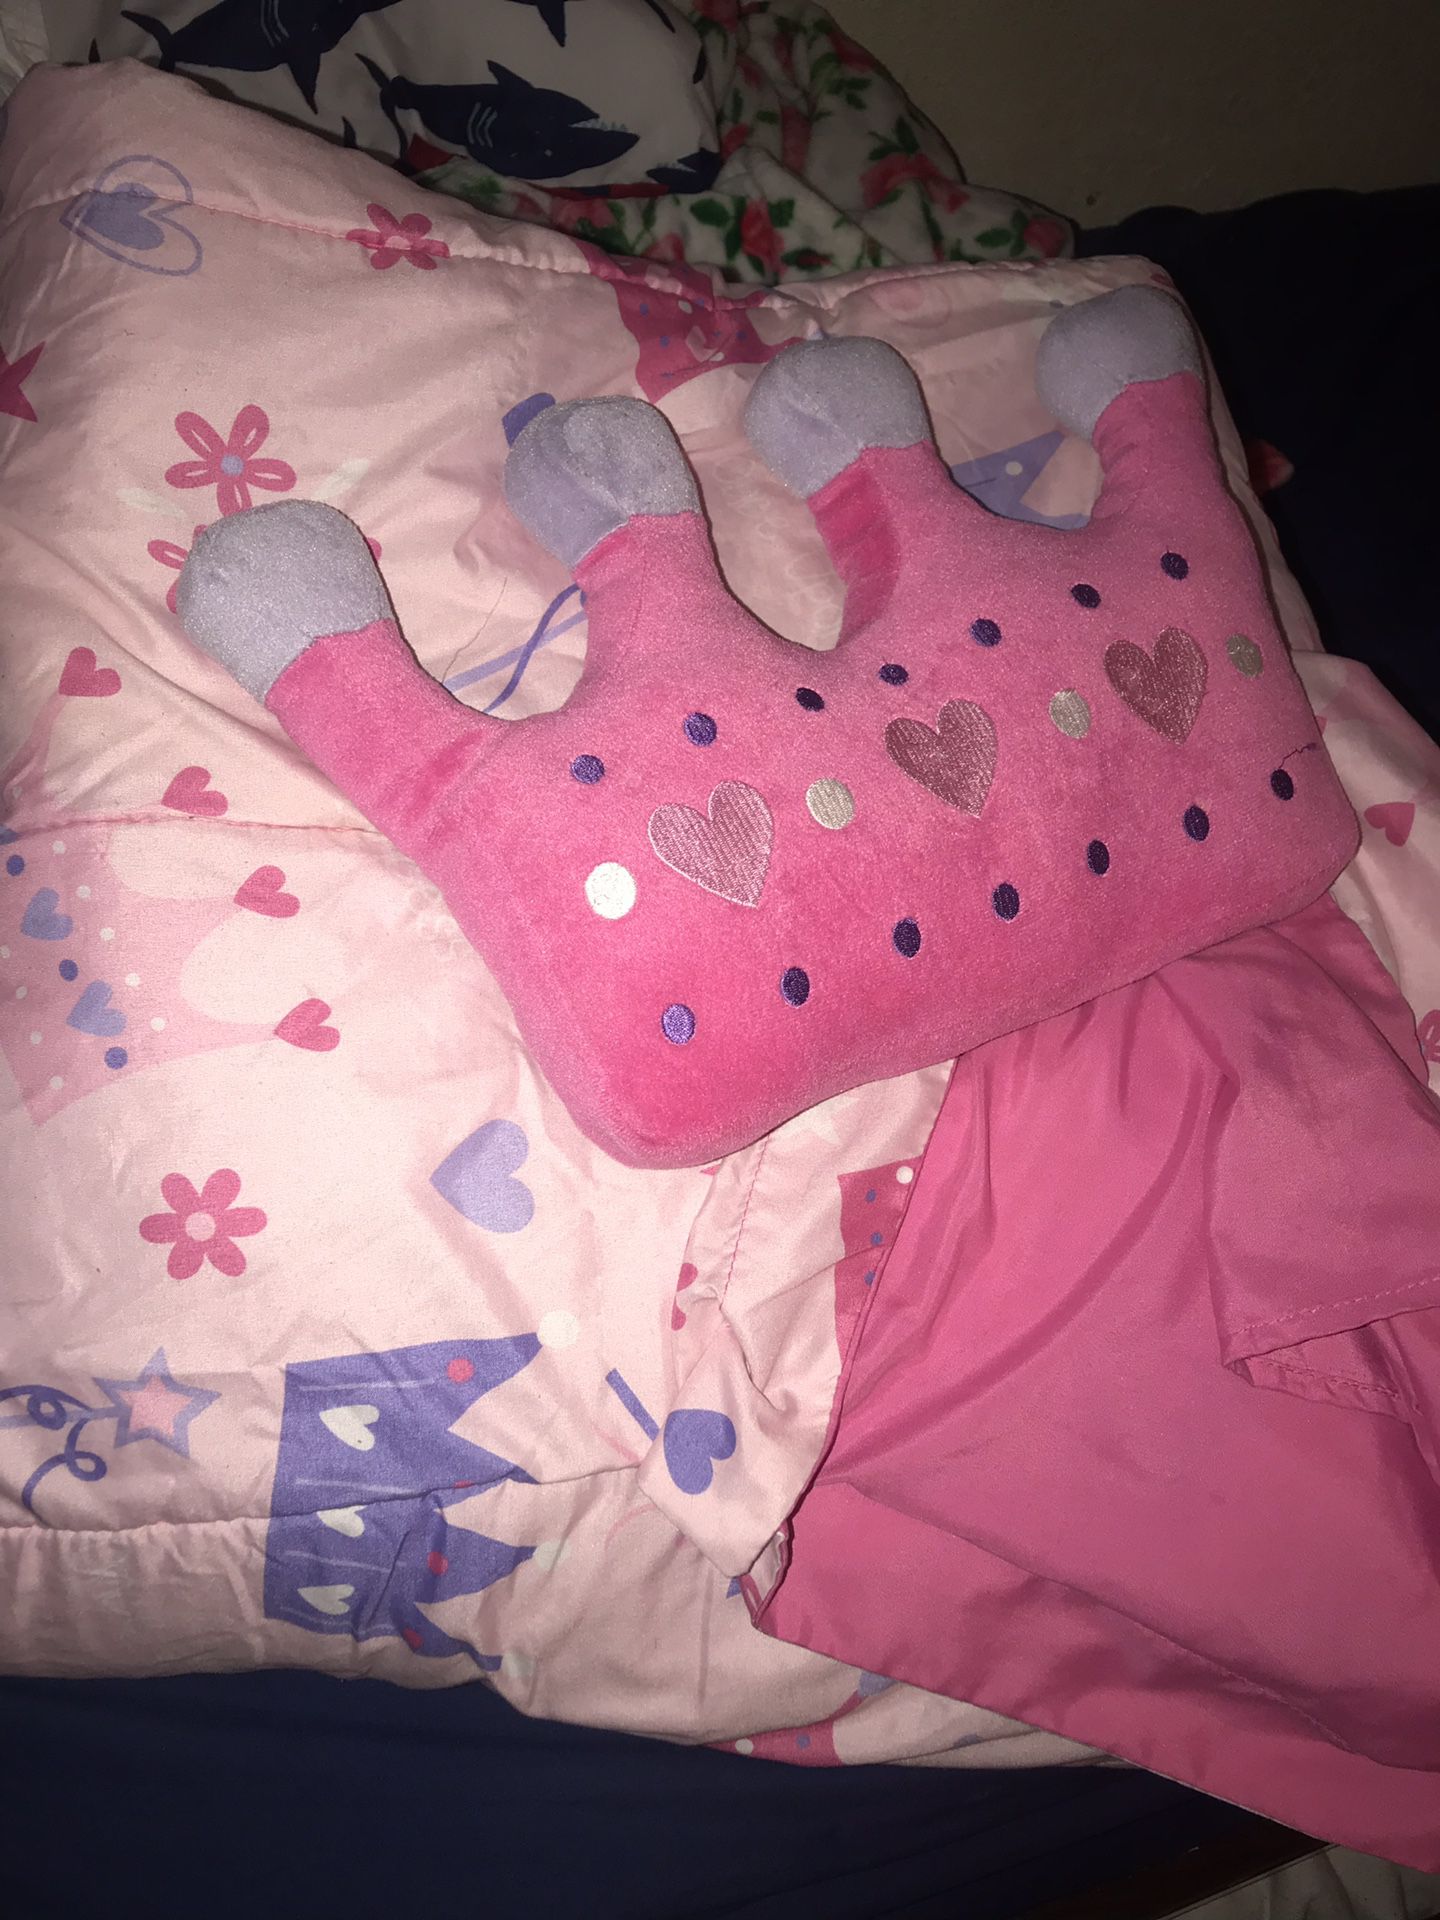 Twin princess pink purple bedding